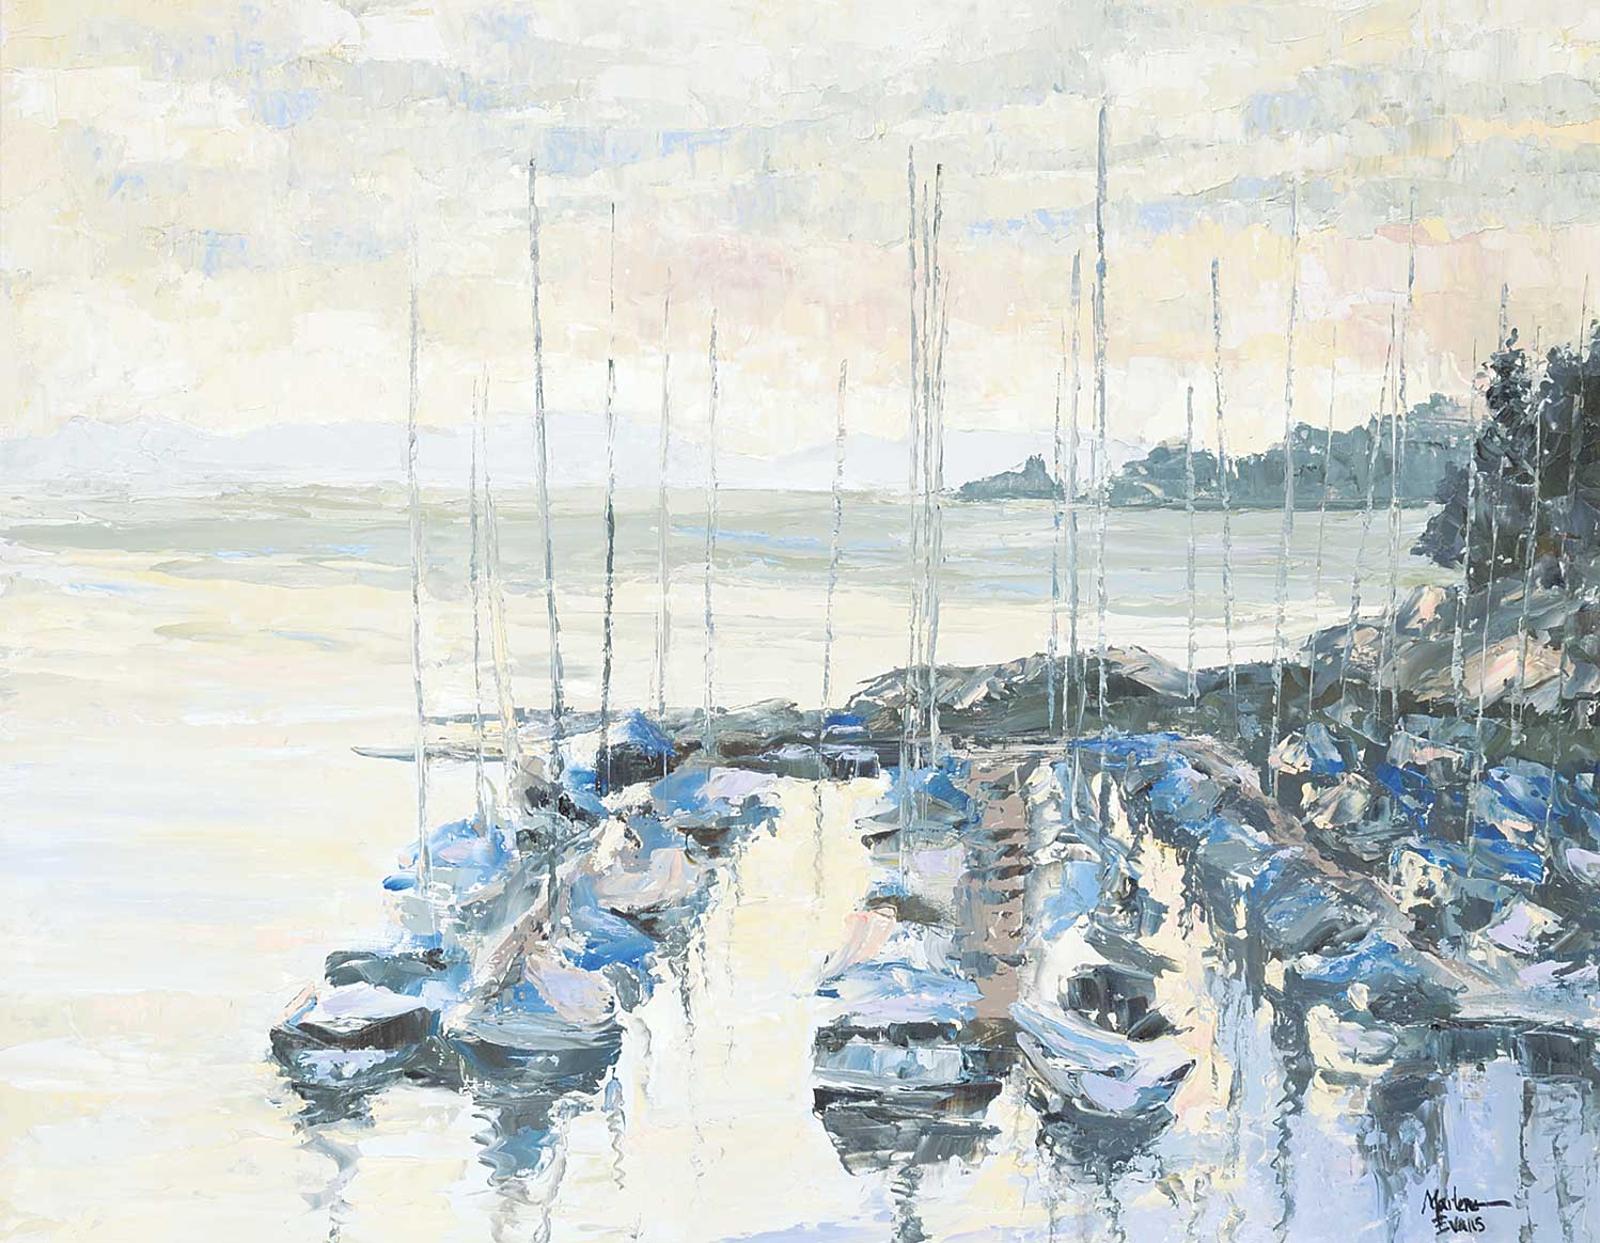 Marlene Evans - Untitled - Sailing Ships in the Harbour